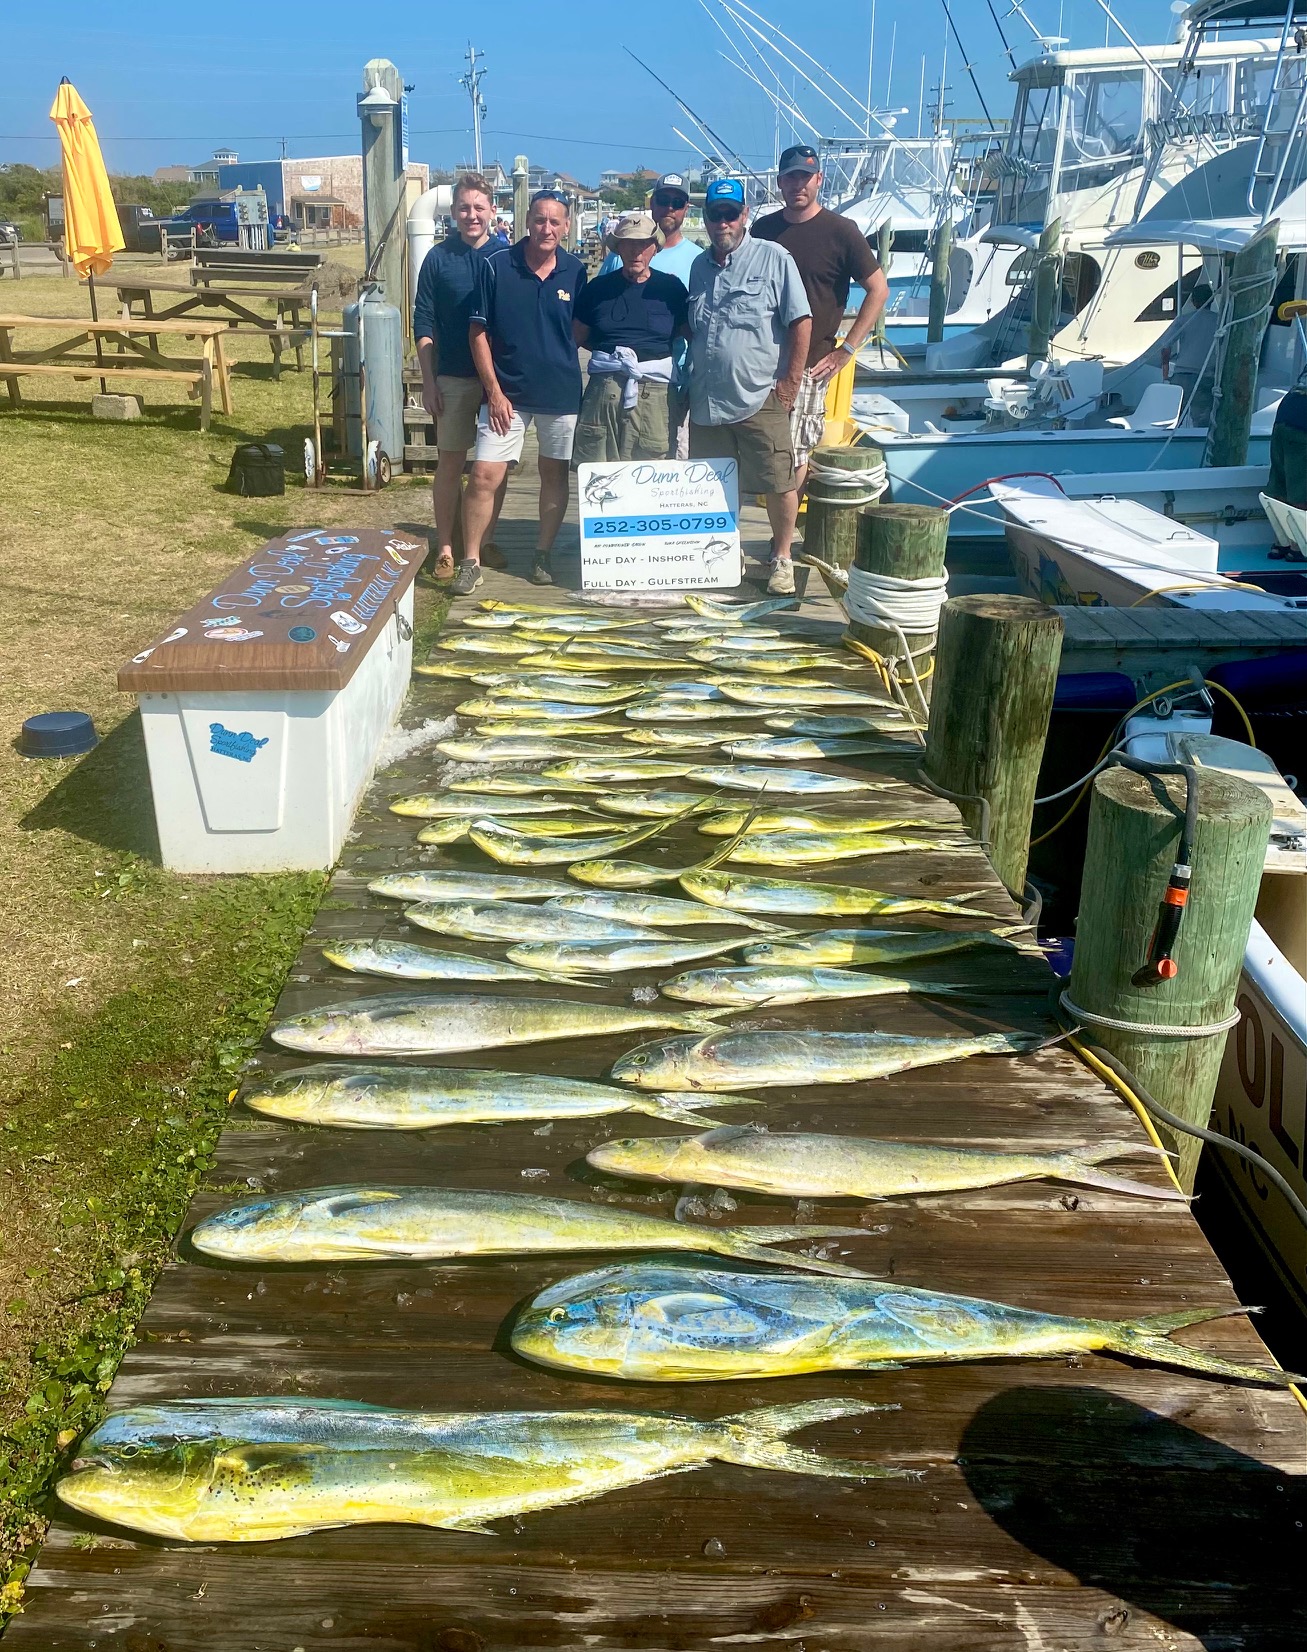 Dunn Deal Offshore Sportfishing Charters Hatteras, NC Teach's Lair Marina